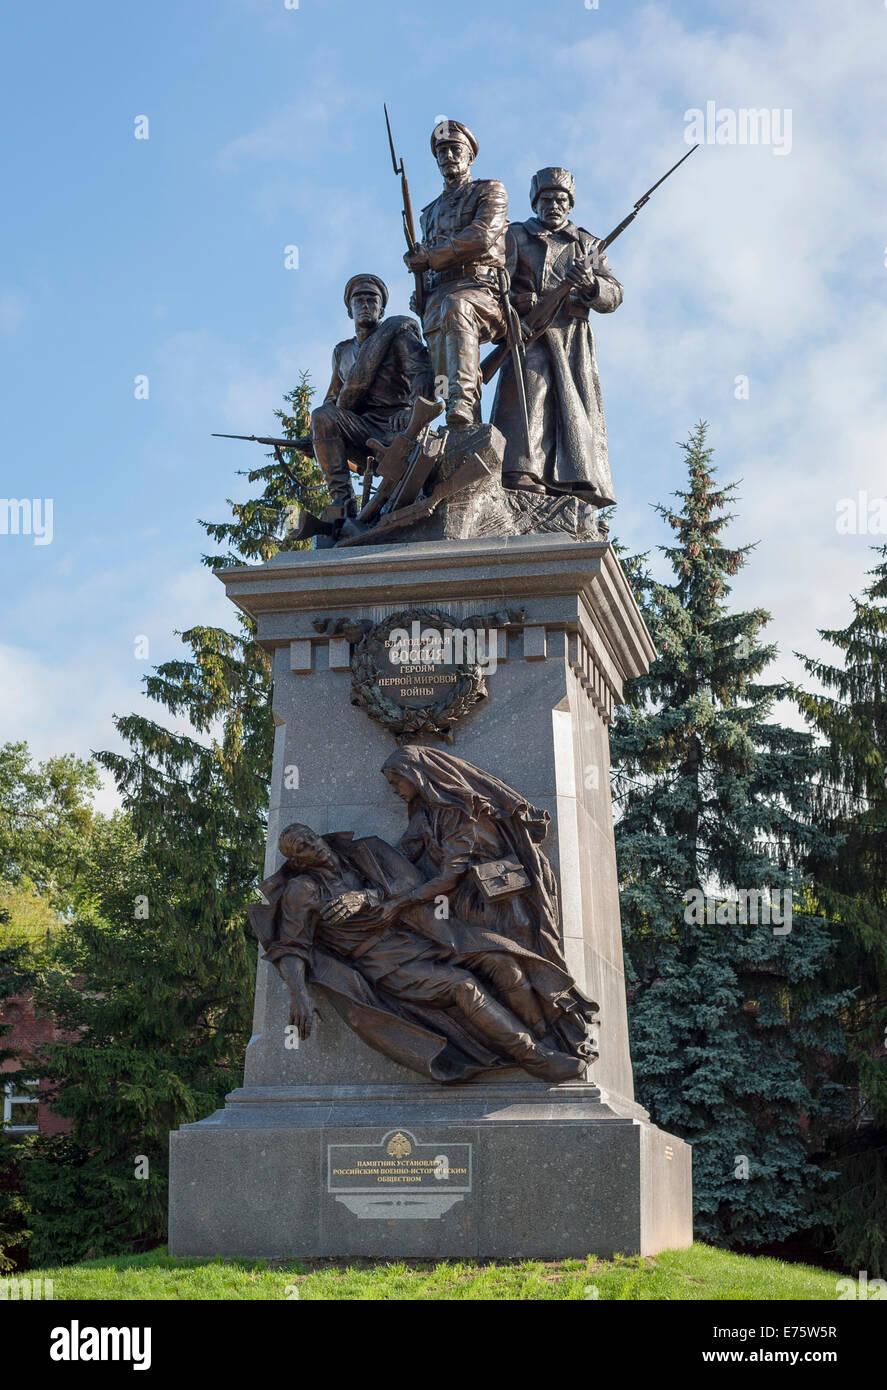 World War I monument, erected in 2014 to mark the 100th anniversary, Kaliningrad, Kaliningrad Oblast, Russia Stock Photo